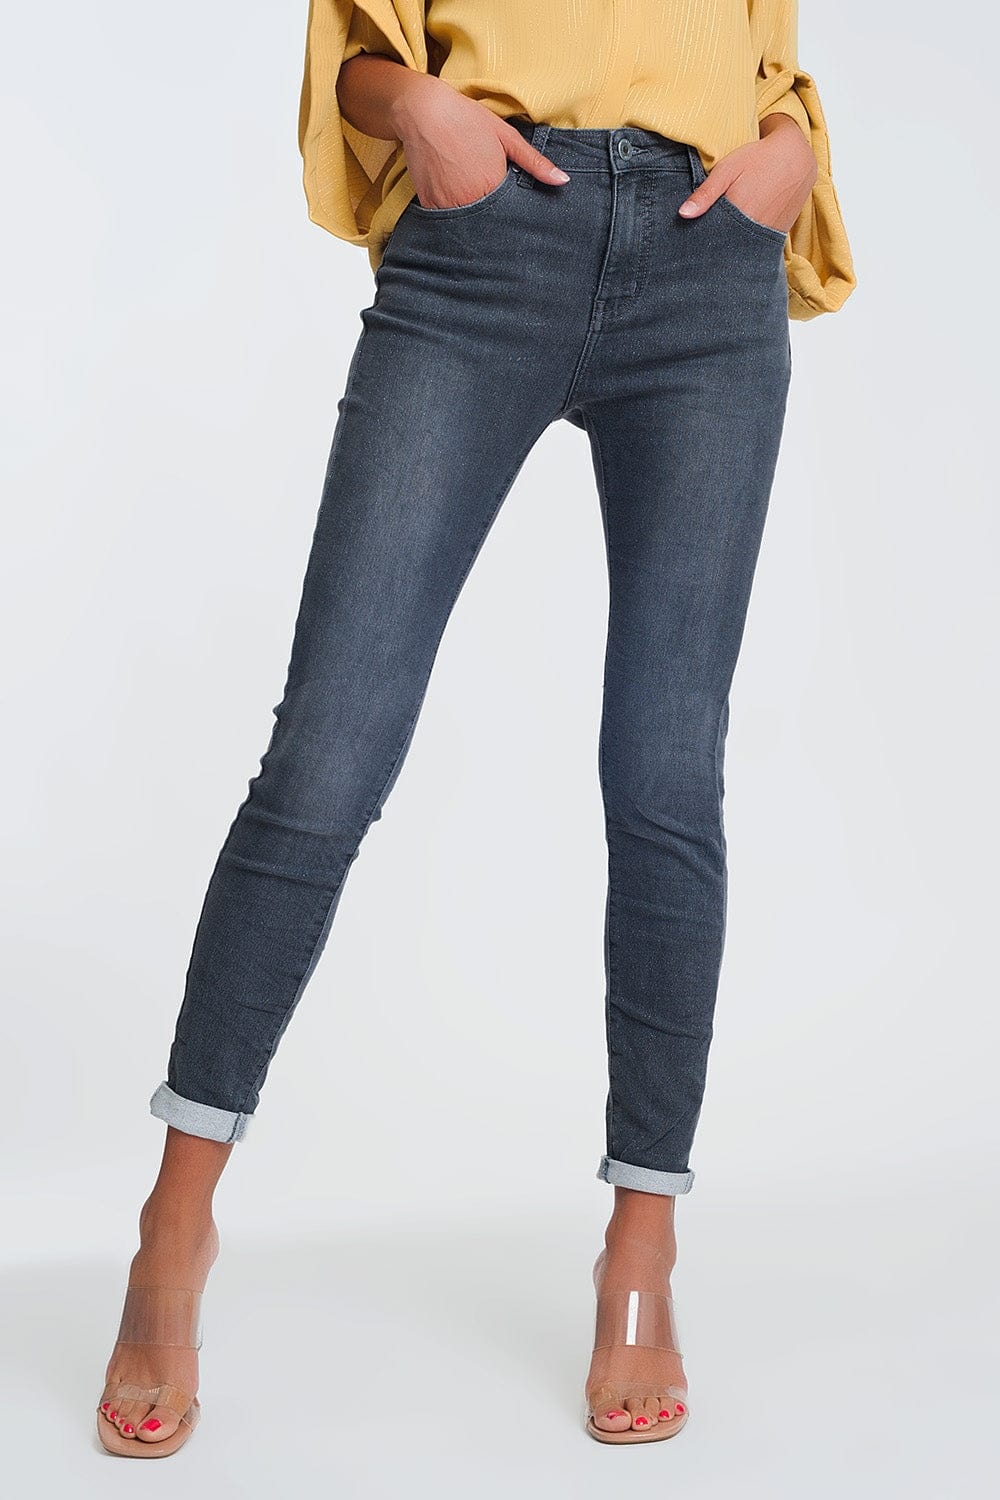 Q2 Women's Jean High Waisted Denim Jeans In Glitter Fabric